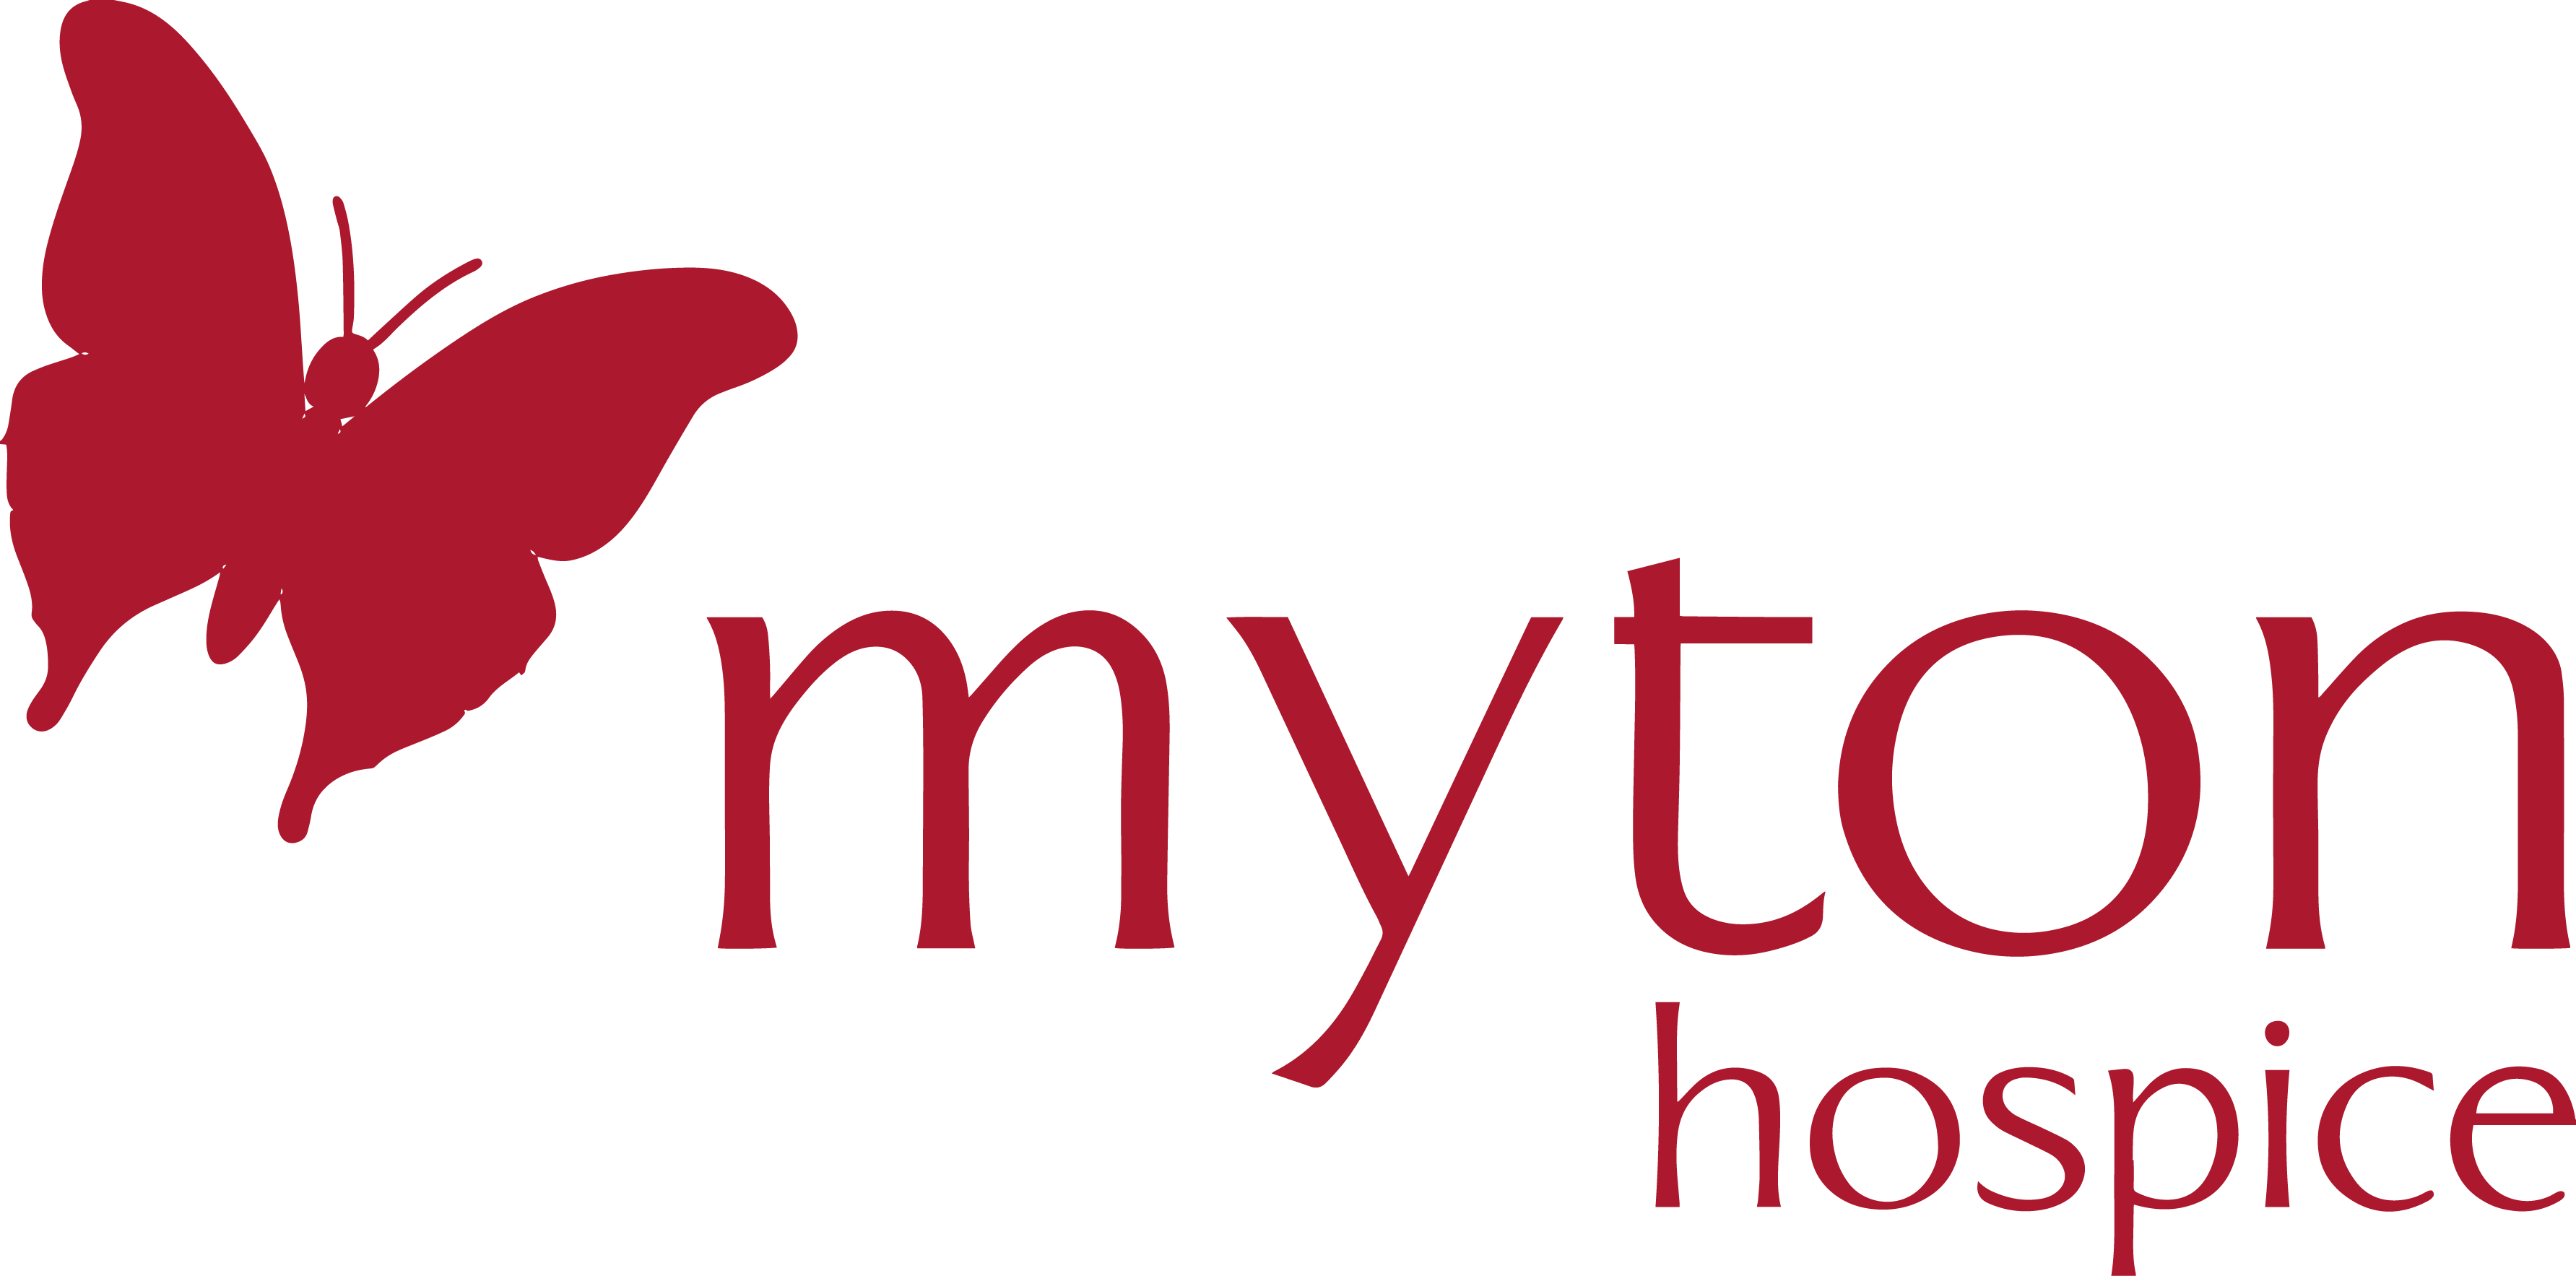 Myton Hospice Logo